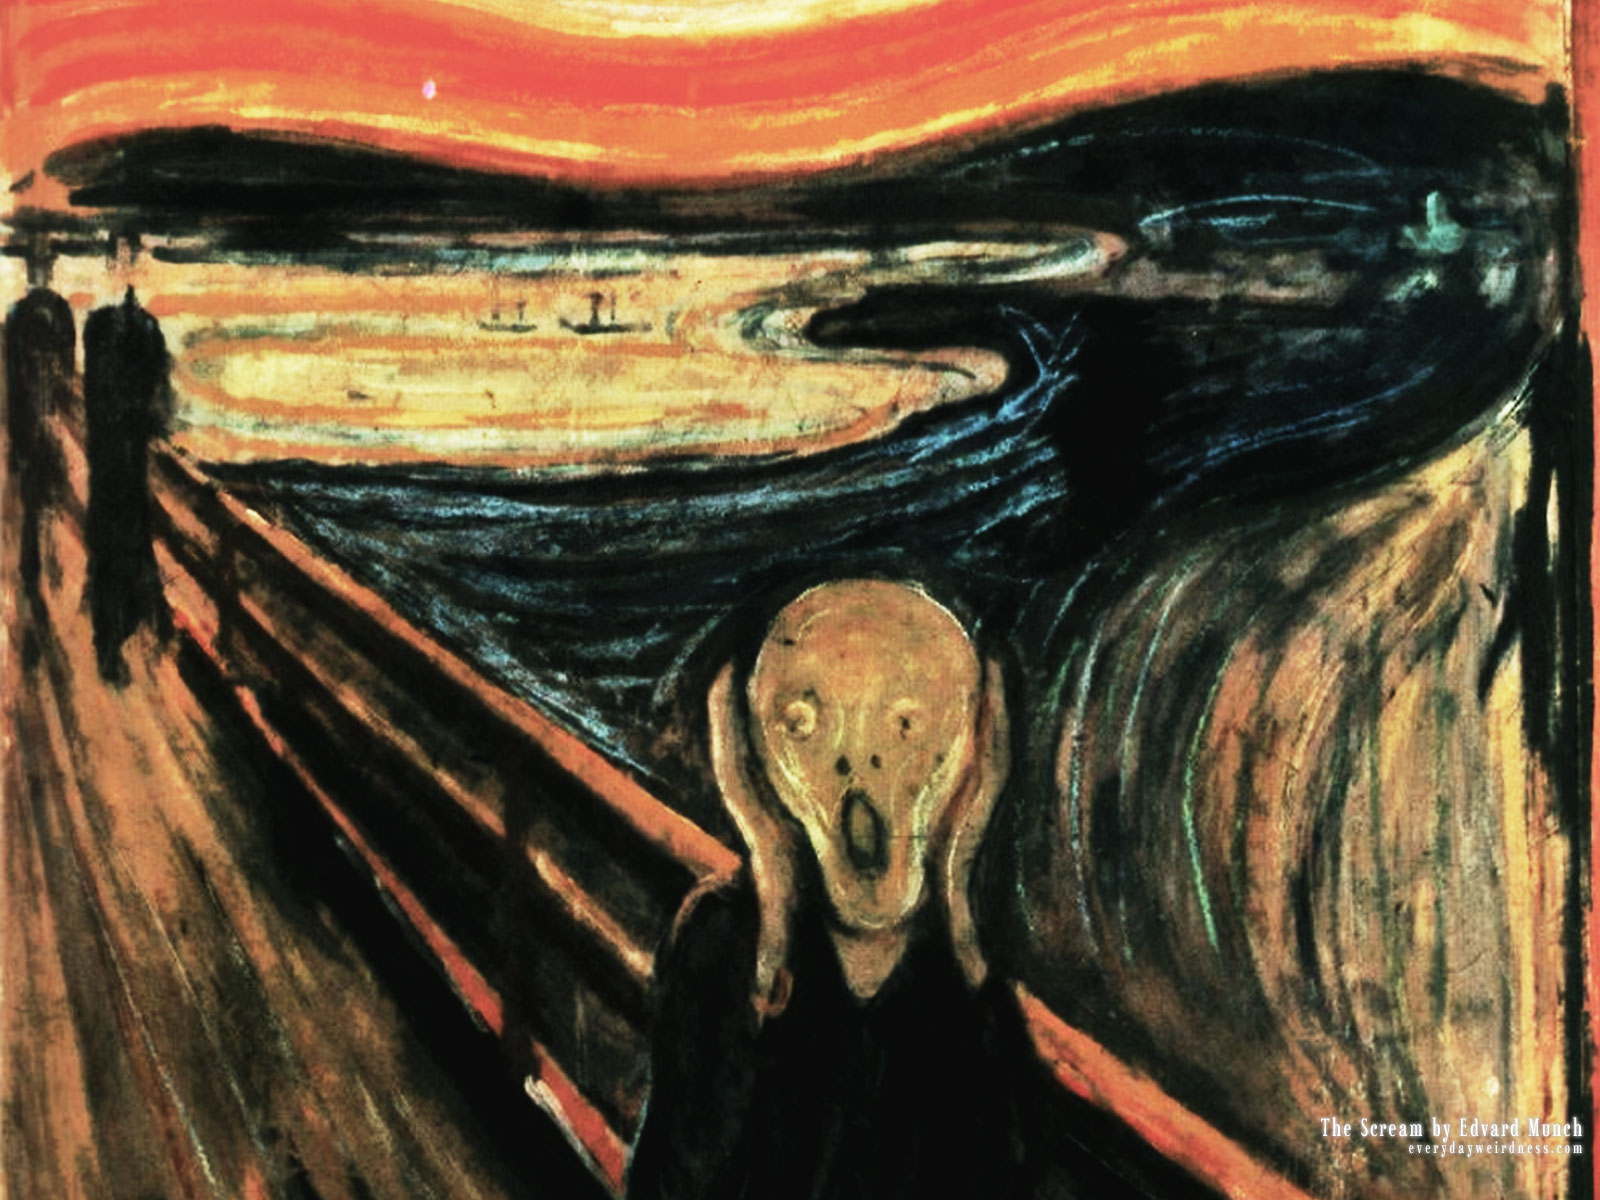 The Scream by Edvard Munch - Everyday Weirdness (January 24th 2009)